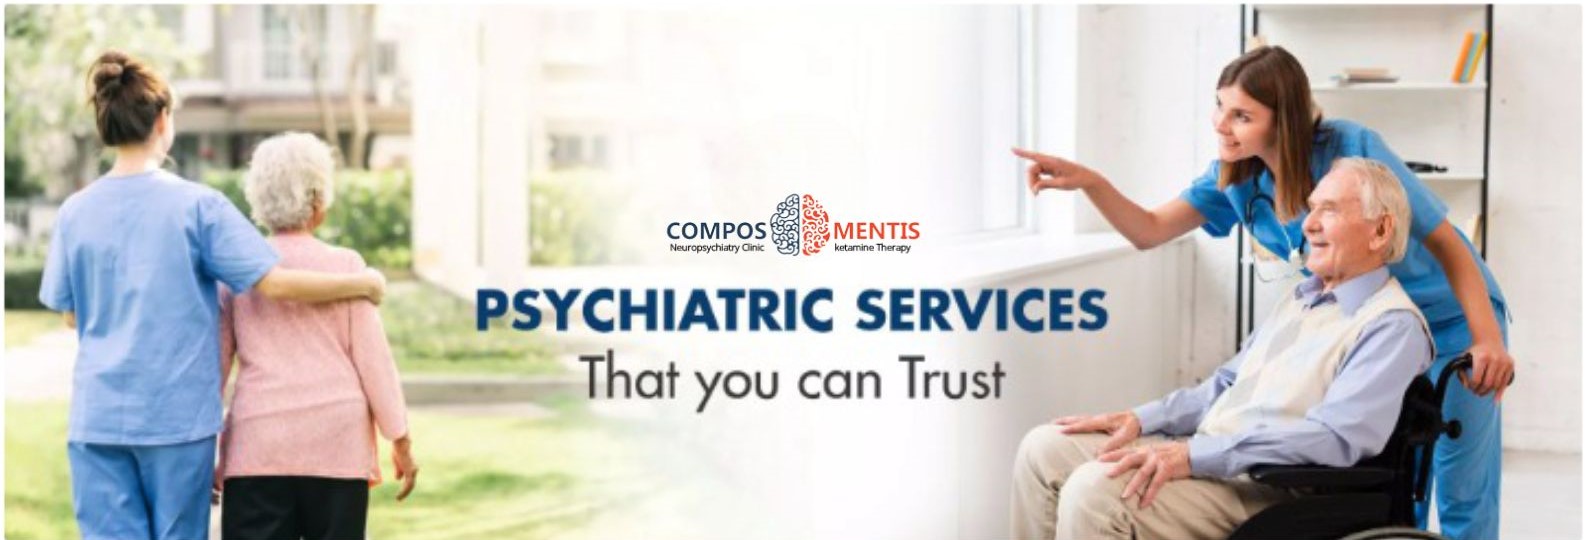 Best Psychiatrist In Pune